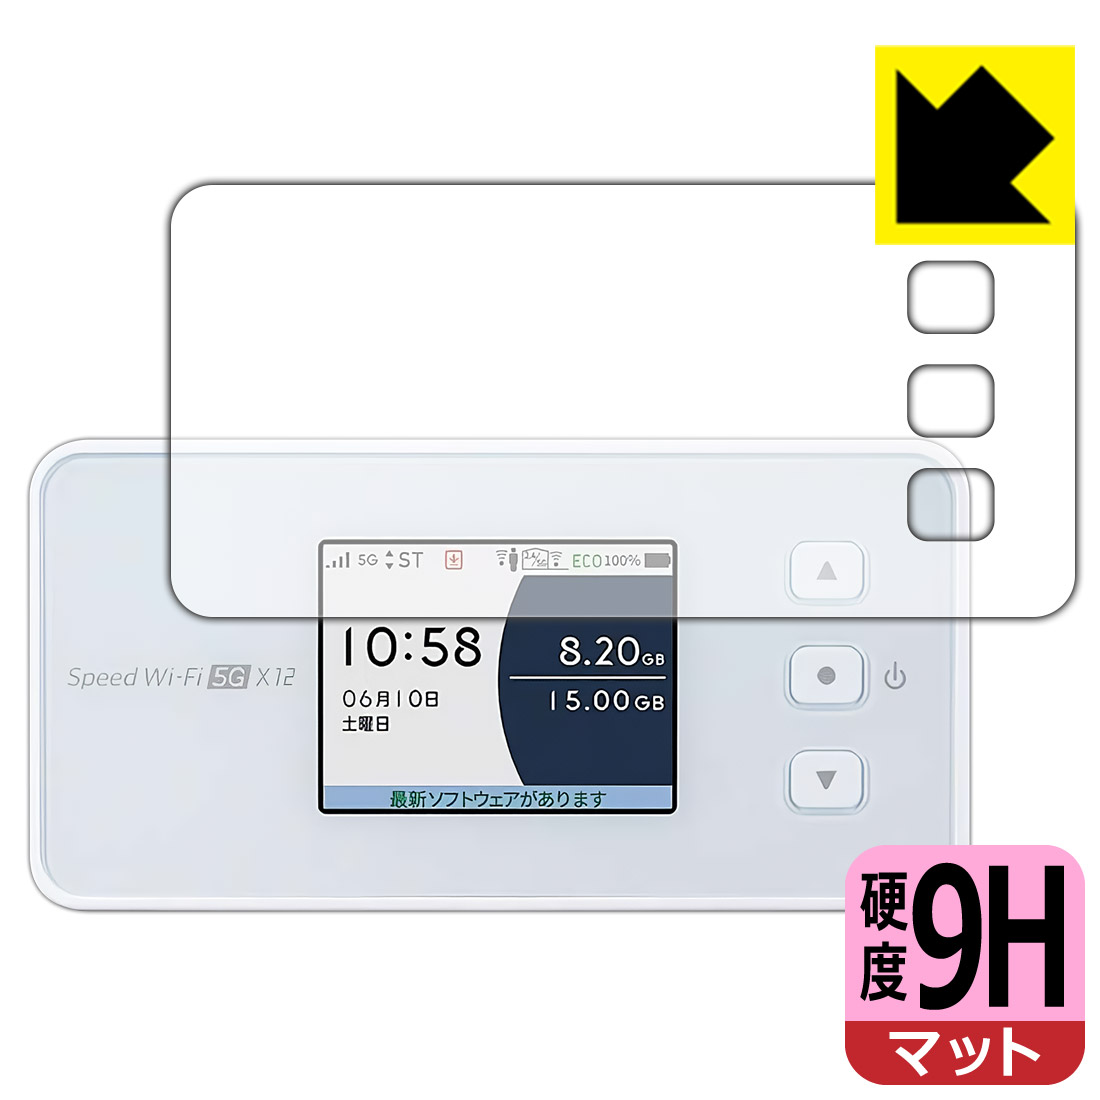 9H高硬度保護フィルム Speed Wi-Fi 5G X12 日本製 自社製造直販